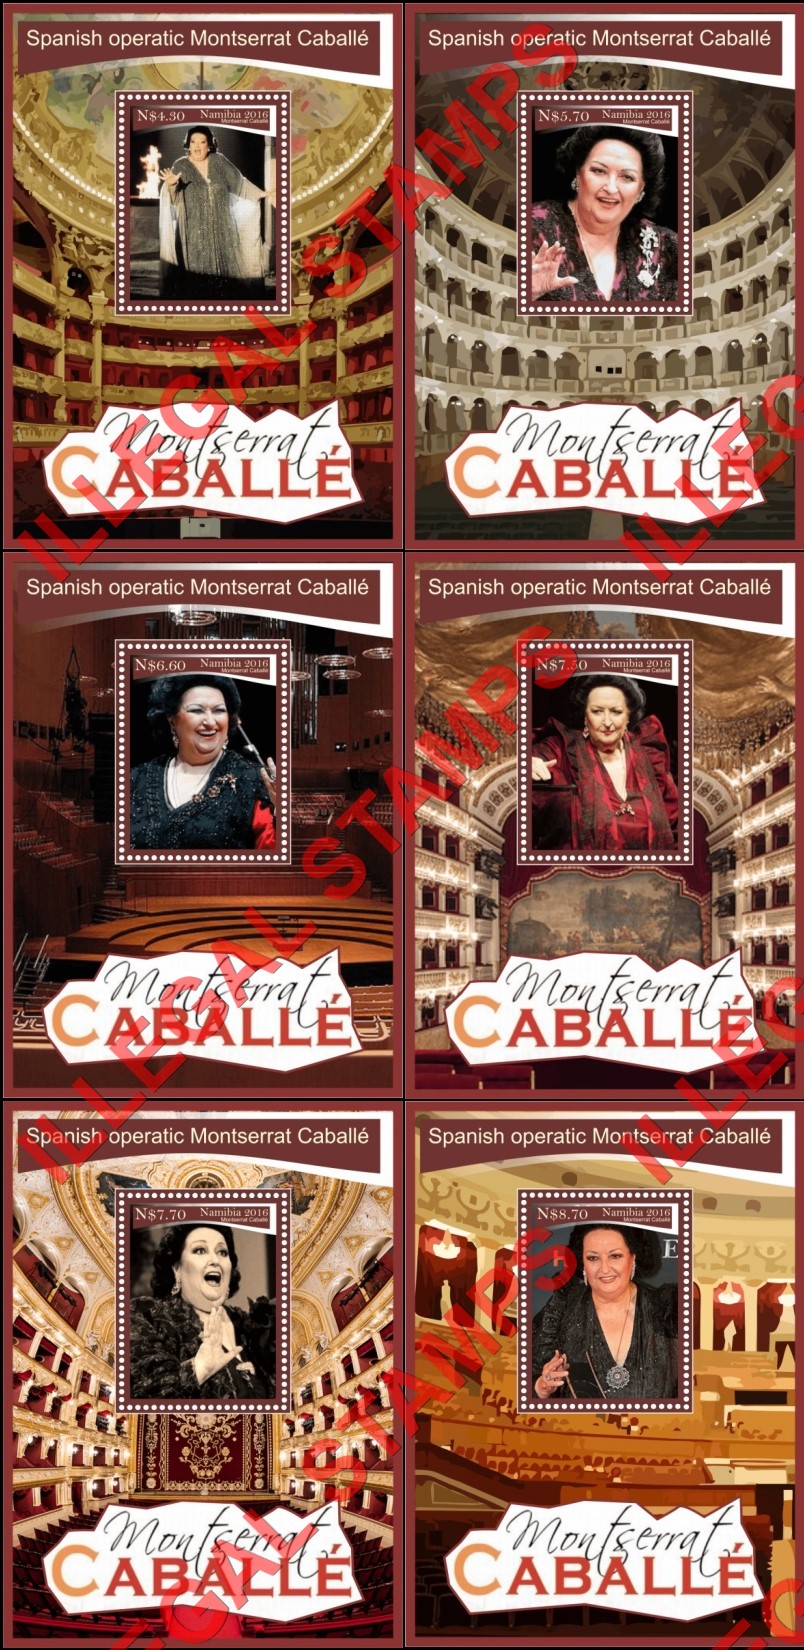 Namibia 2016 Montserrat Caballe Spanish Operatic Soprano Illegal Stamp Souvenir Sheets of 1